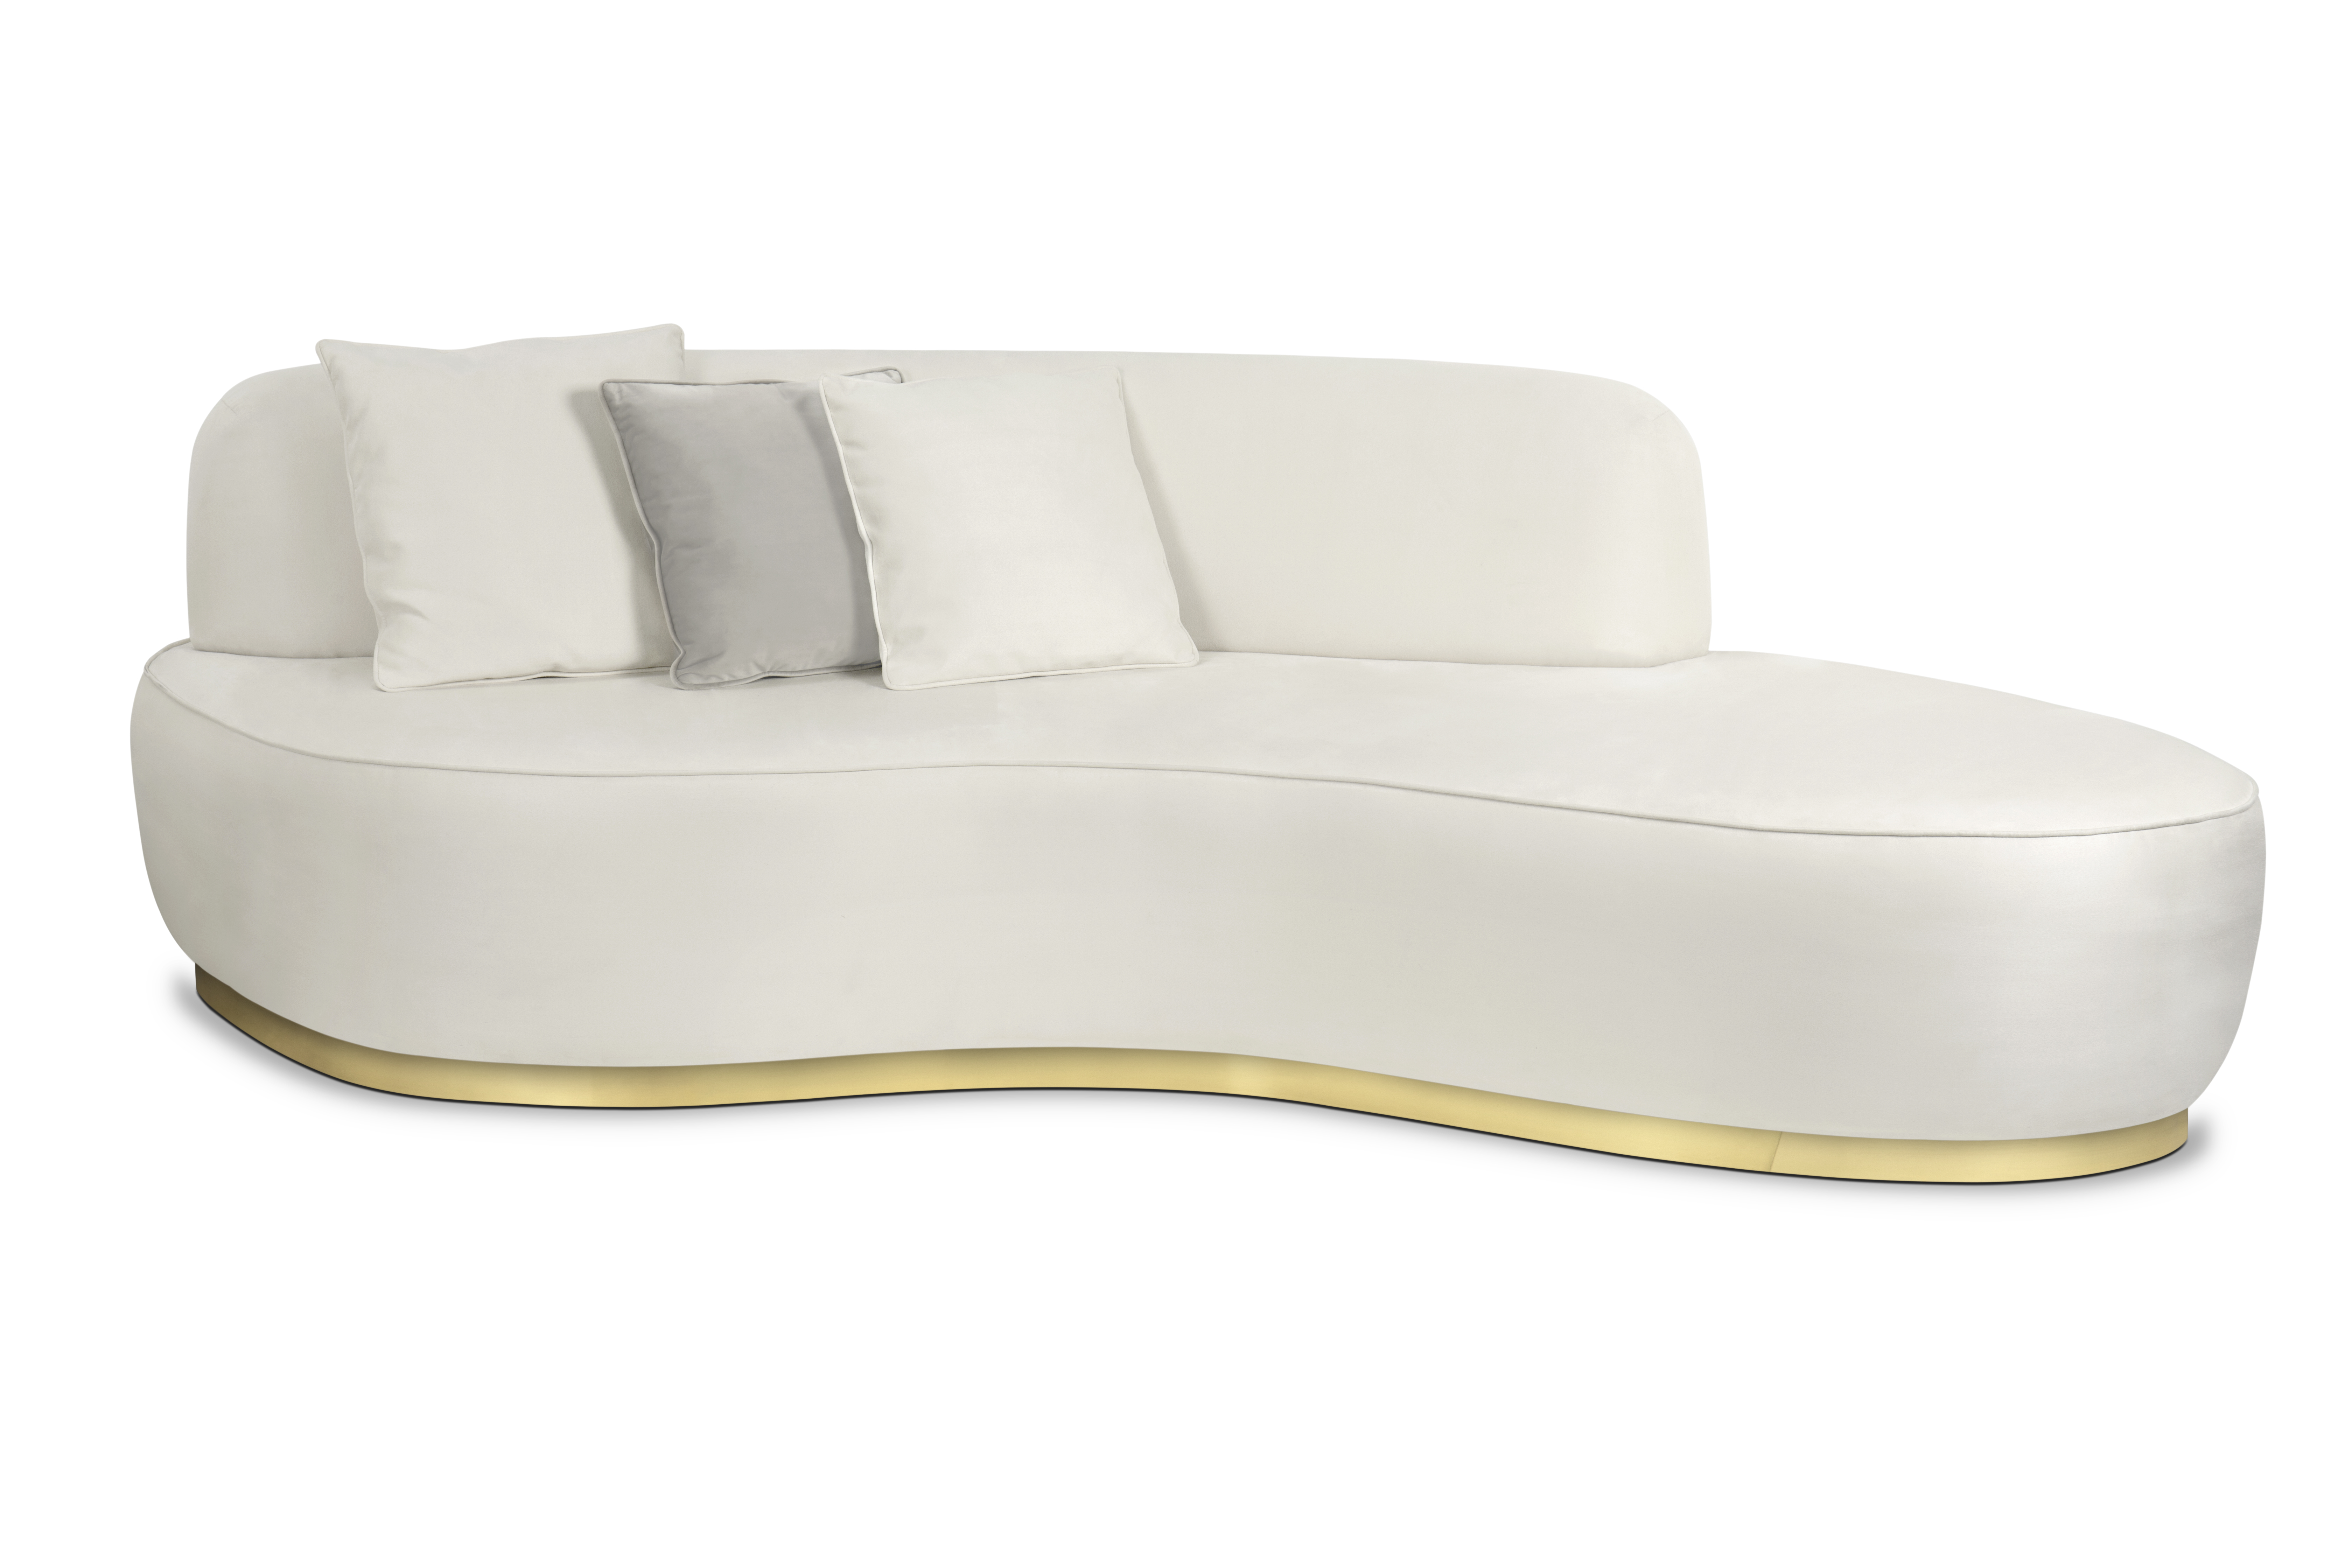 modern furniture Neutral Hues In Modern Furniture Designs For A Contemporary Home odette sofa boca do lobo 01 HR